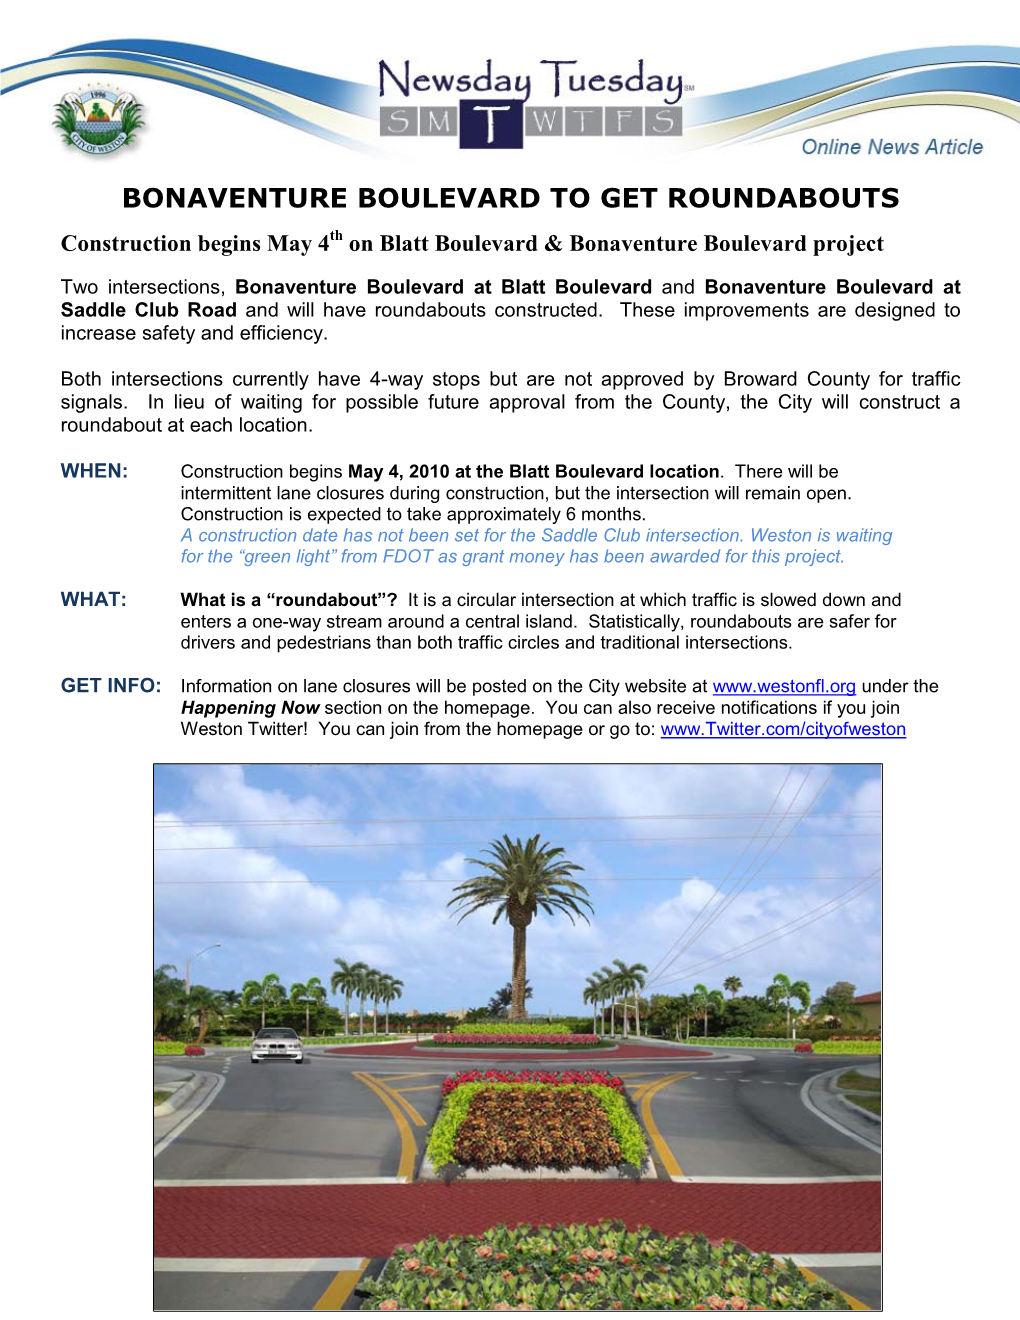 Bonaventure Boulevard to Get Roundabouts